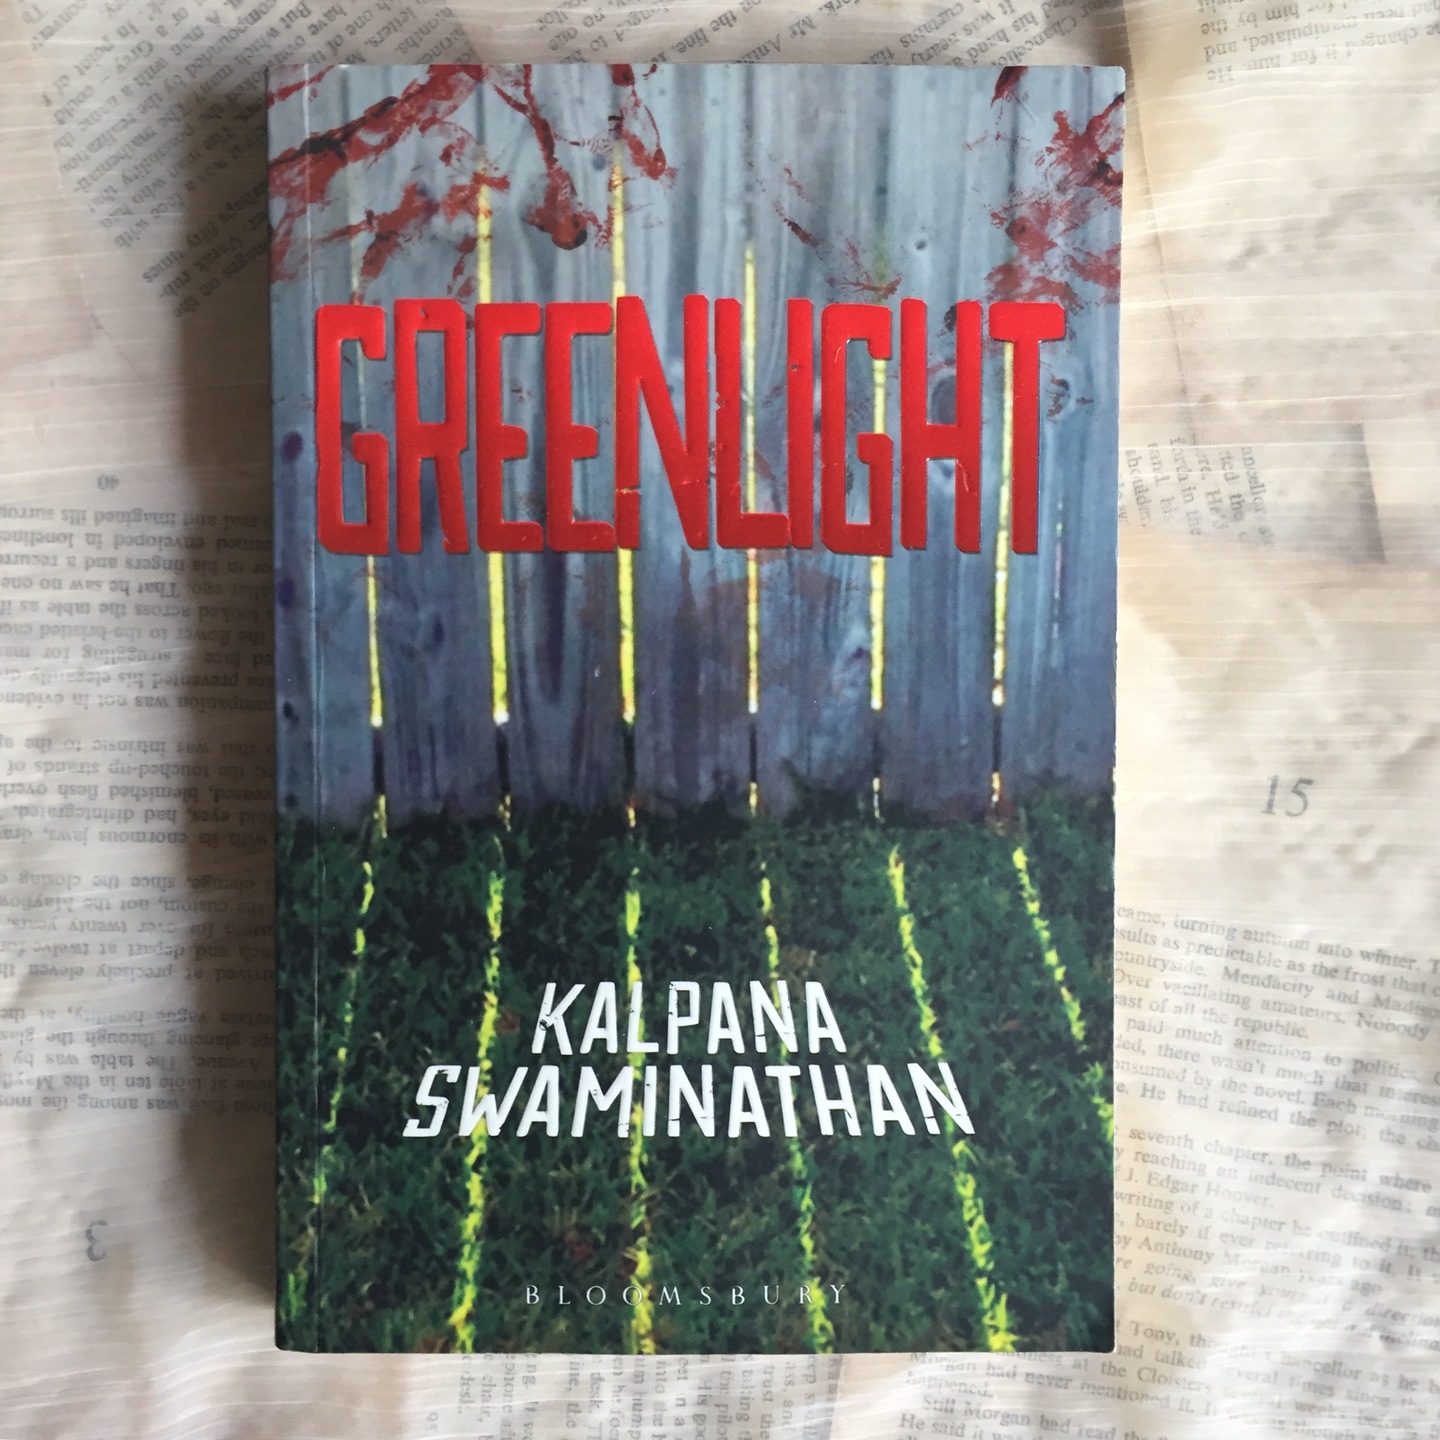 Greenlight by Kalpana Swaminathan [Paperback]